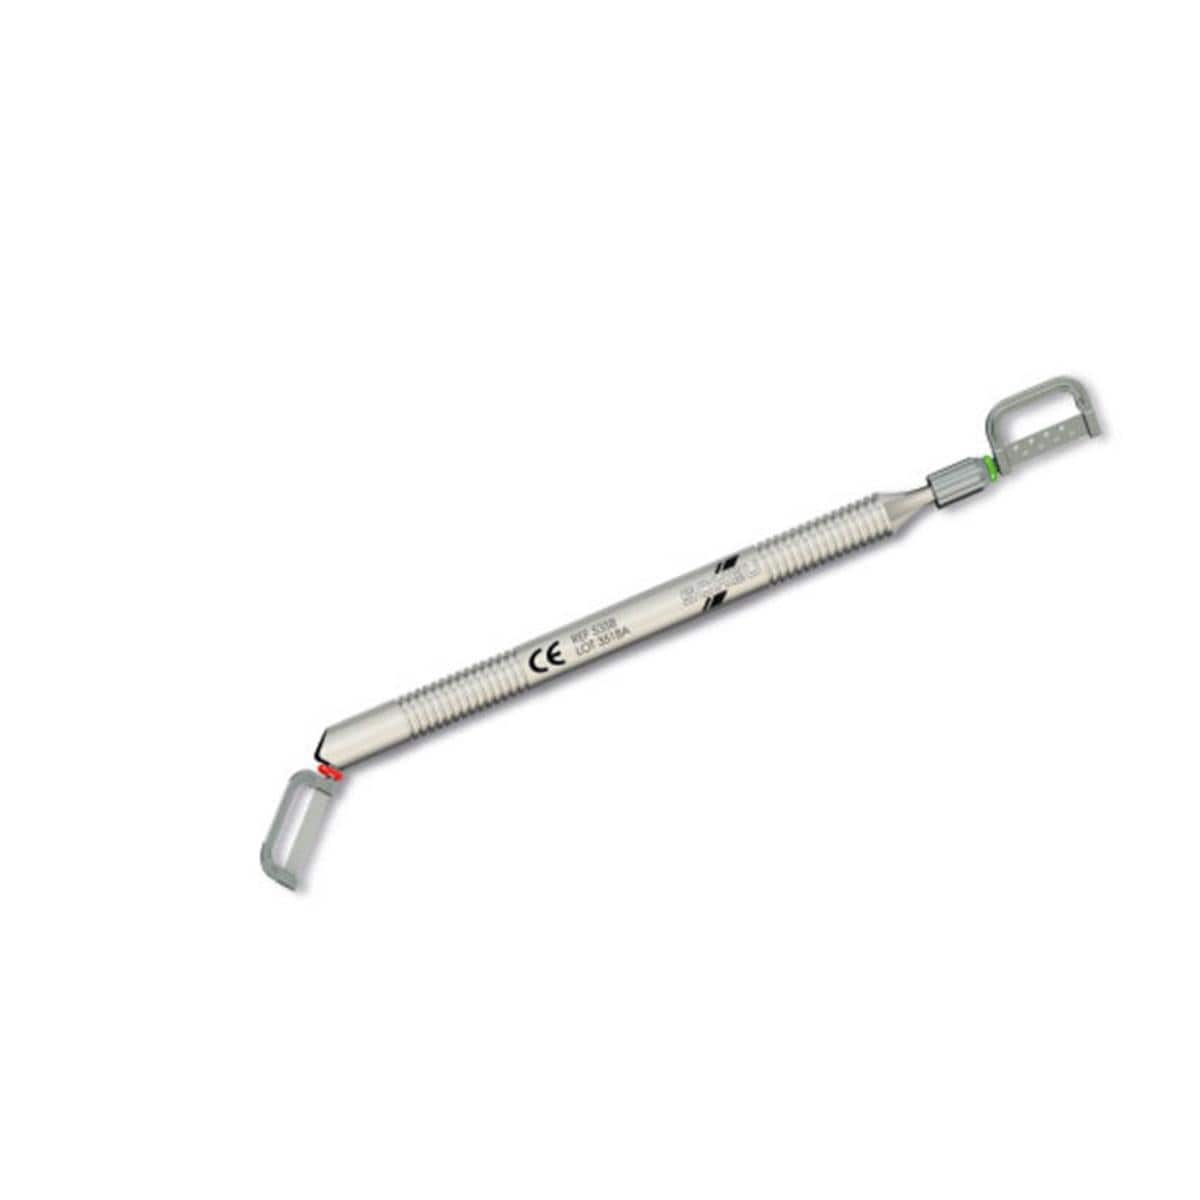 CA Stripping Tool houder - REF. 5358, per stuk